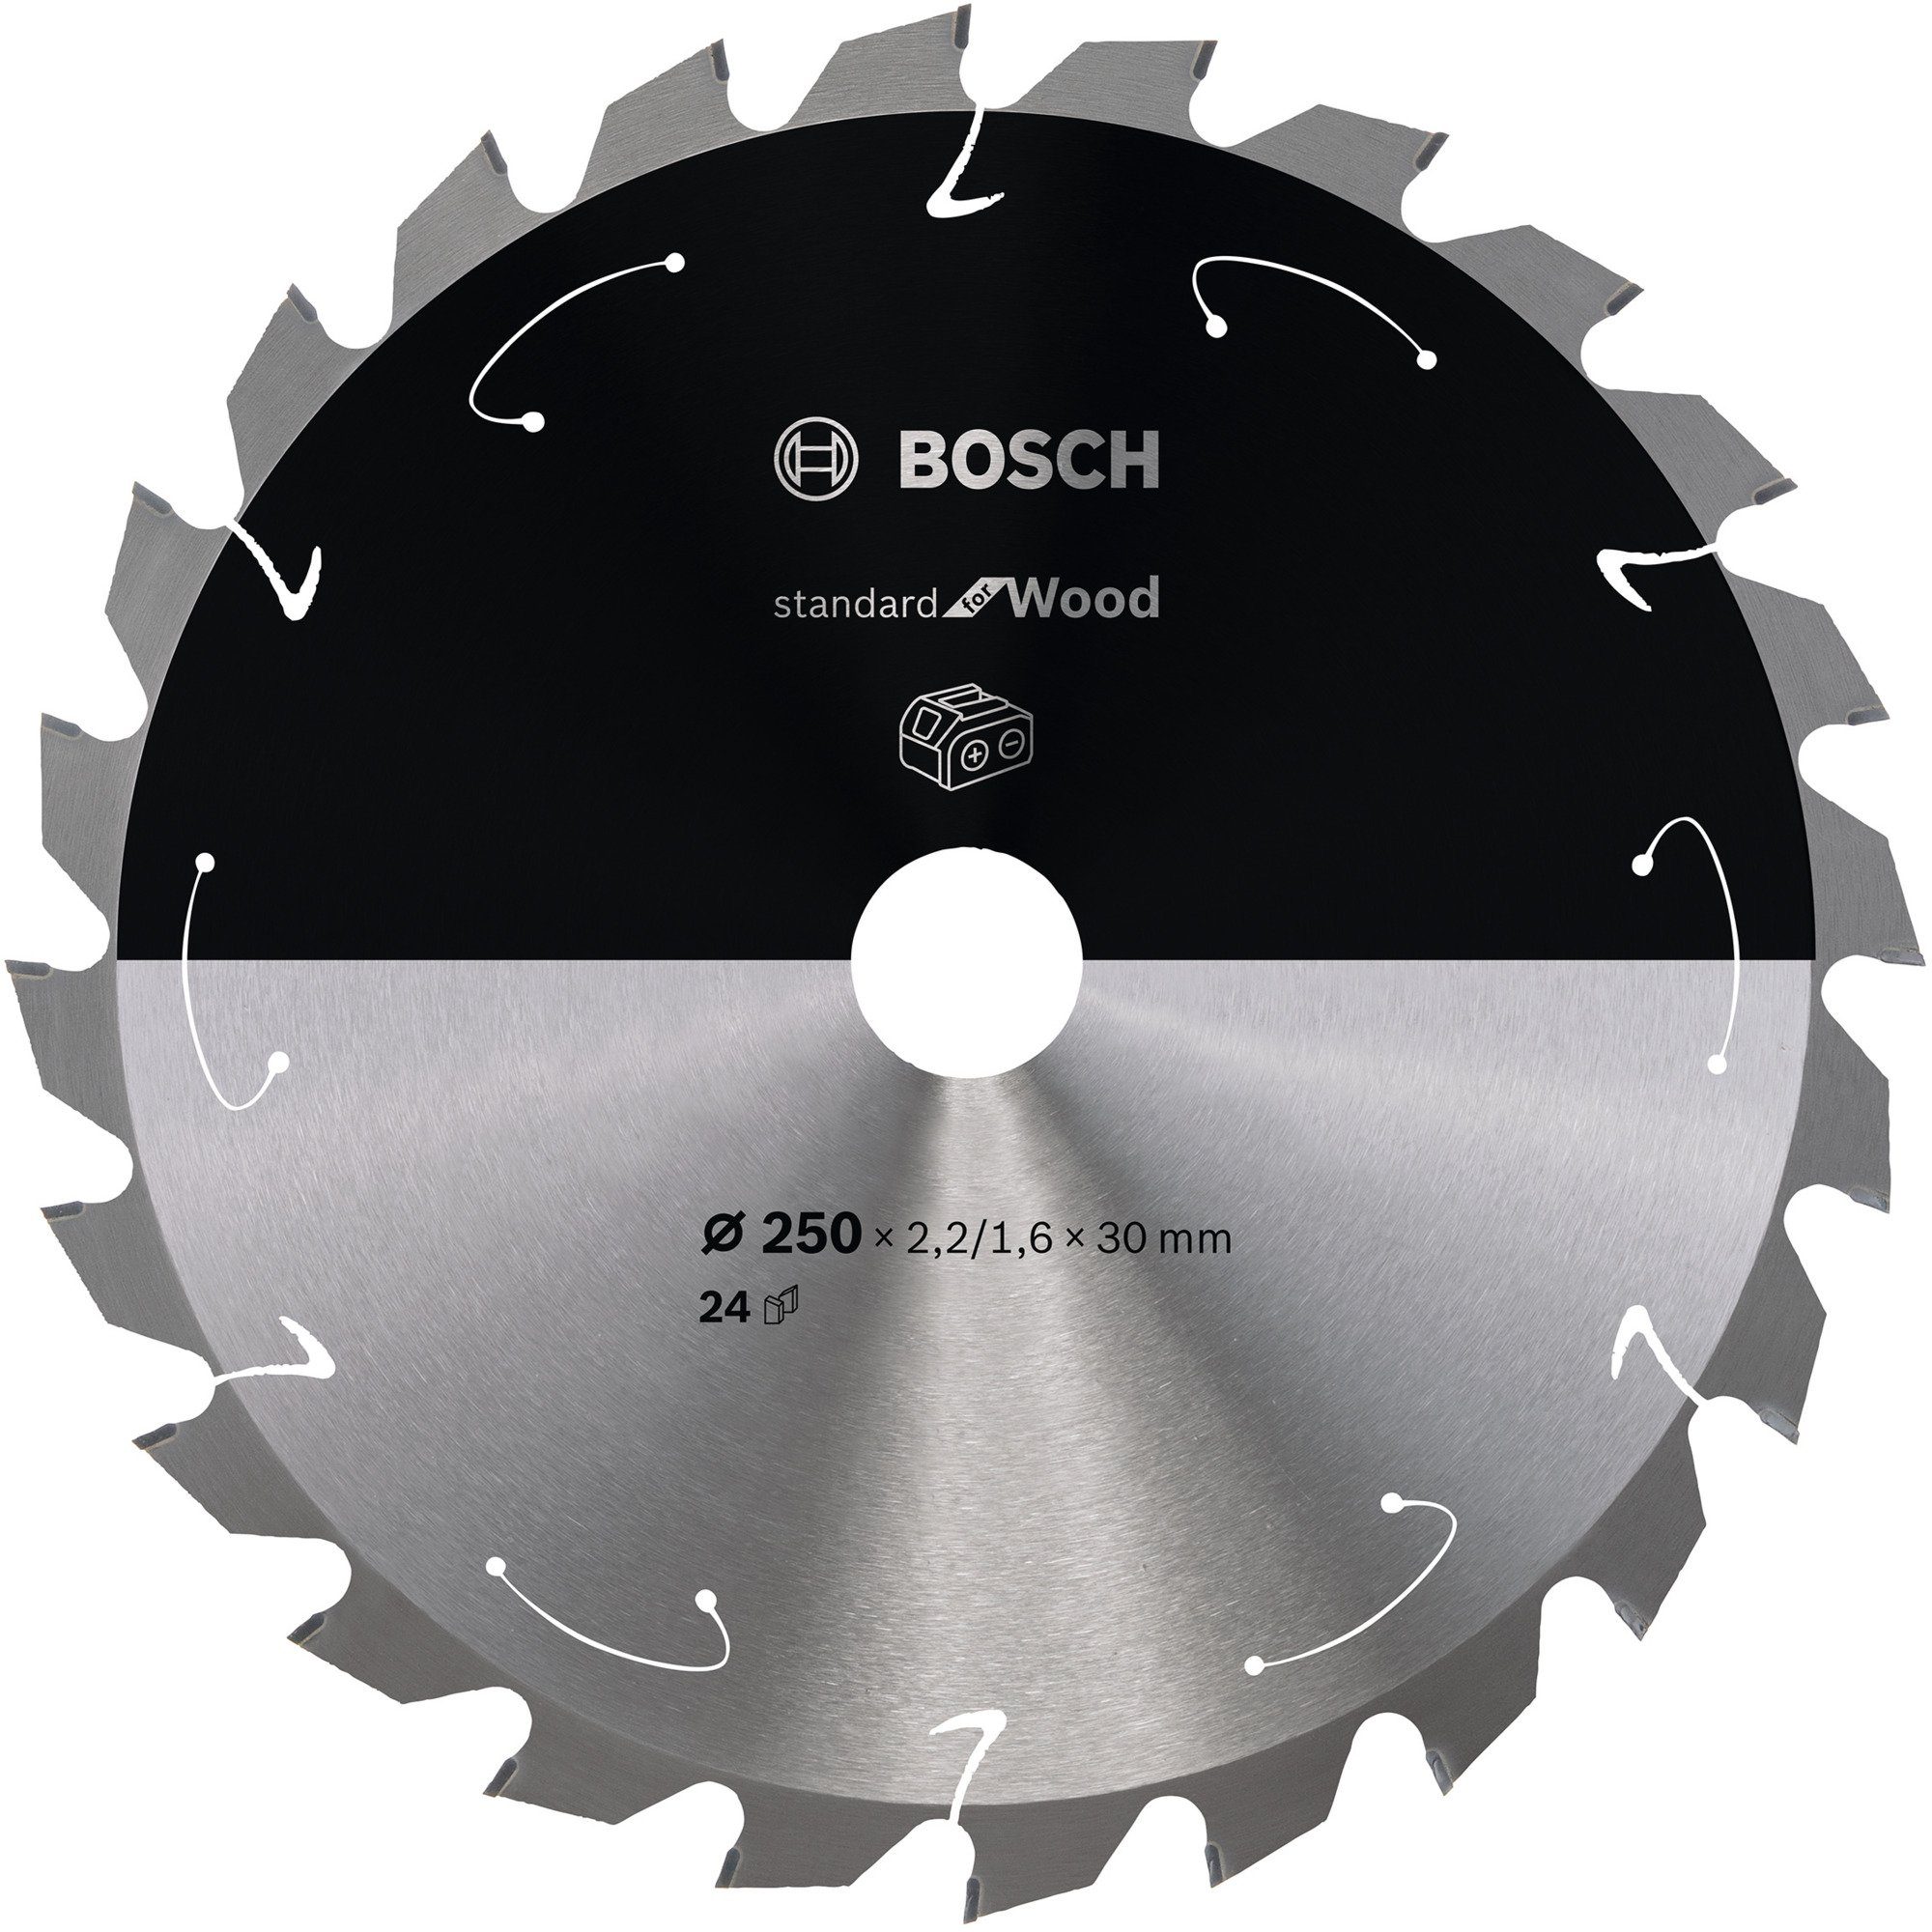 Vorzüglichkeiten BOSCH Sägeblatt Bosch Professional Kreissägeblatt for Standard